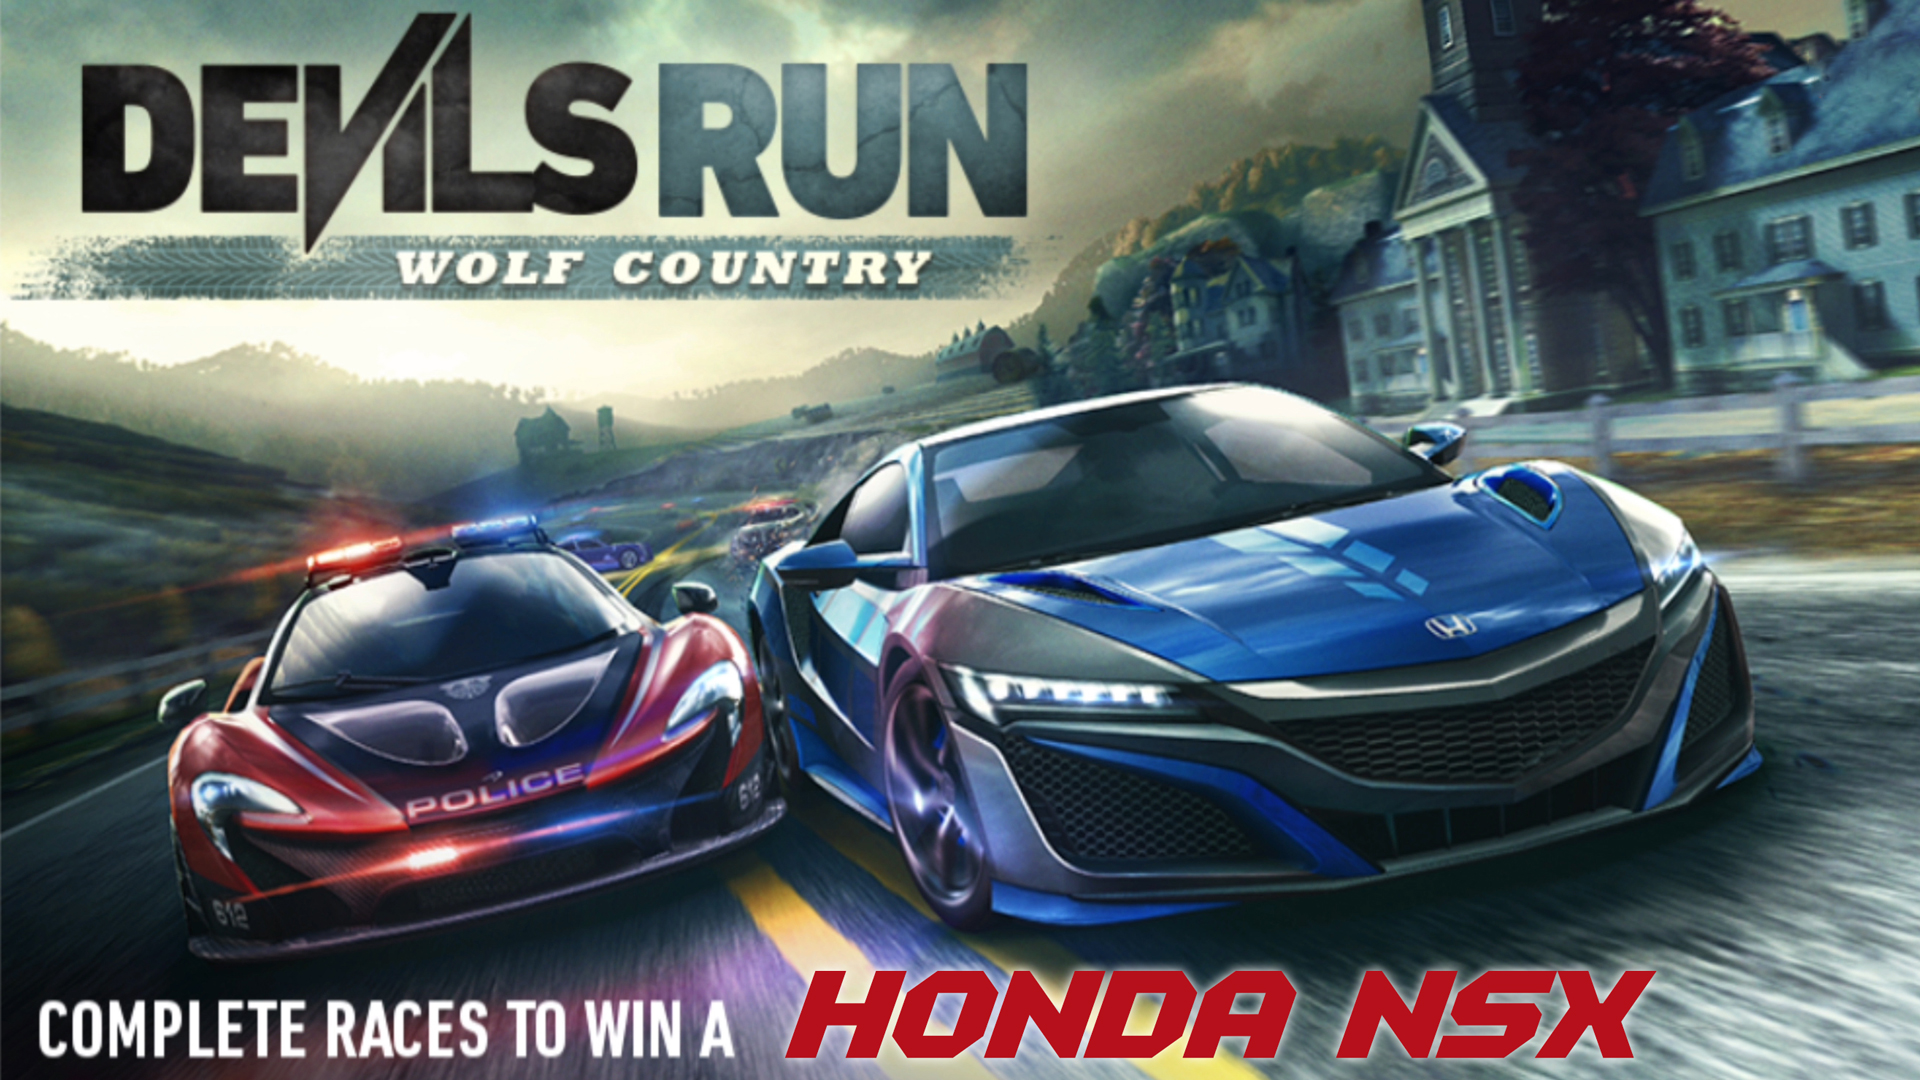 Honda Nsx Devils Run Wolf Country Nfs No Limits Full Event Freelancergamer